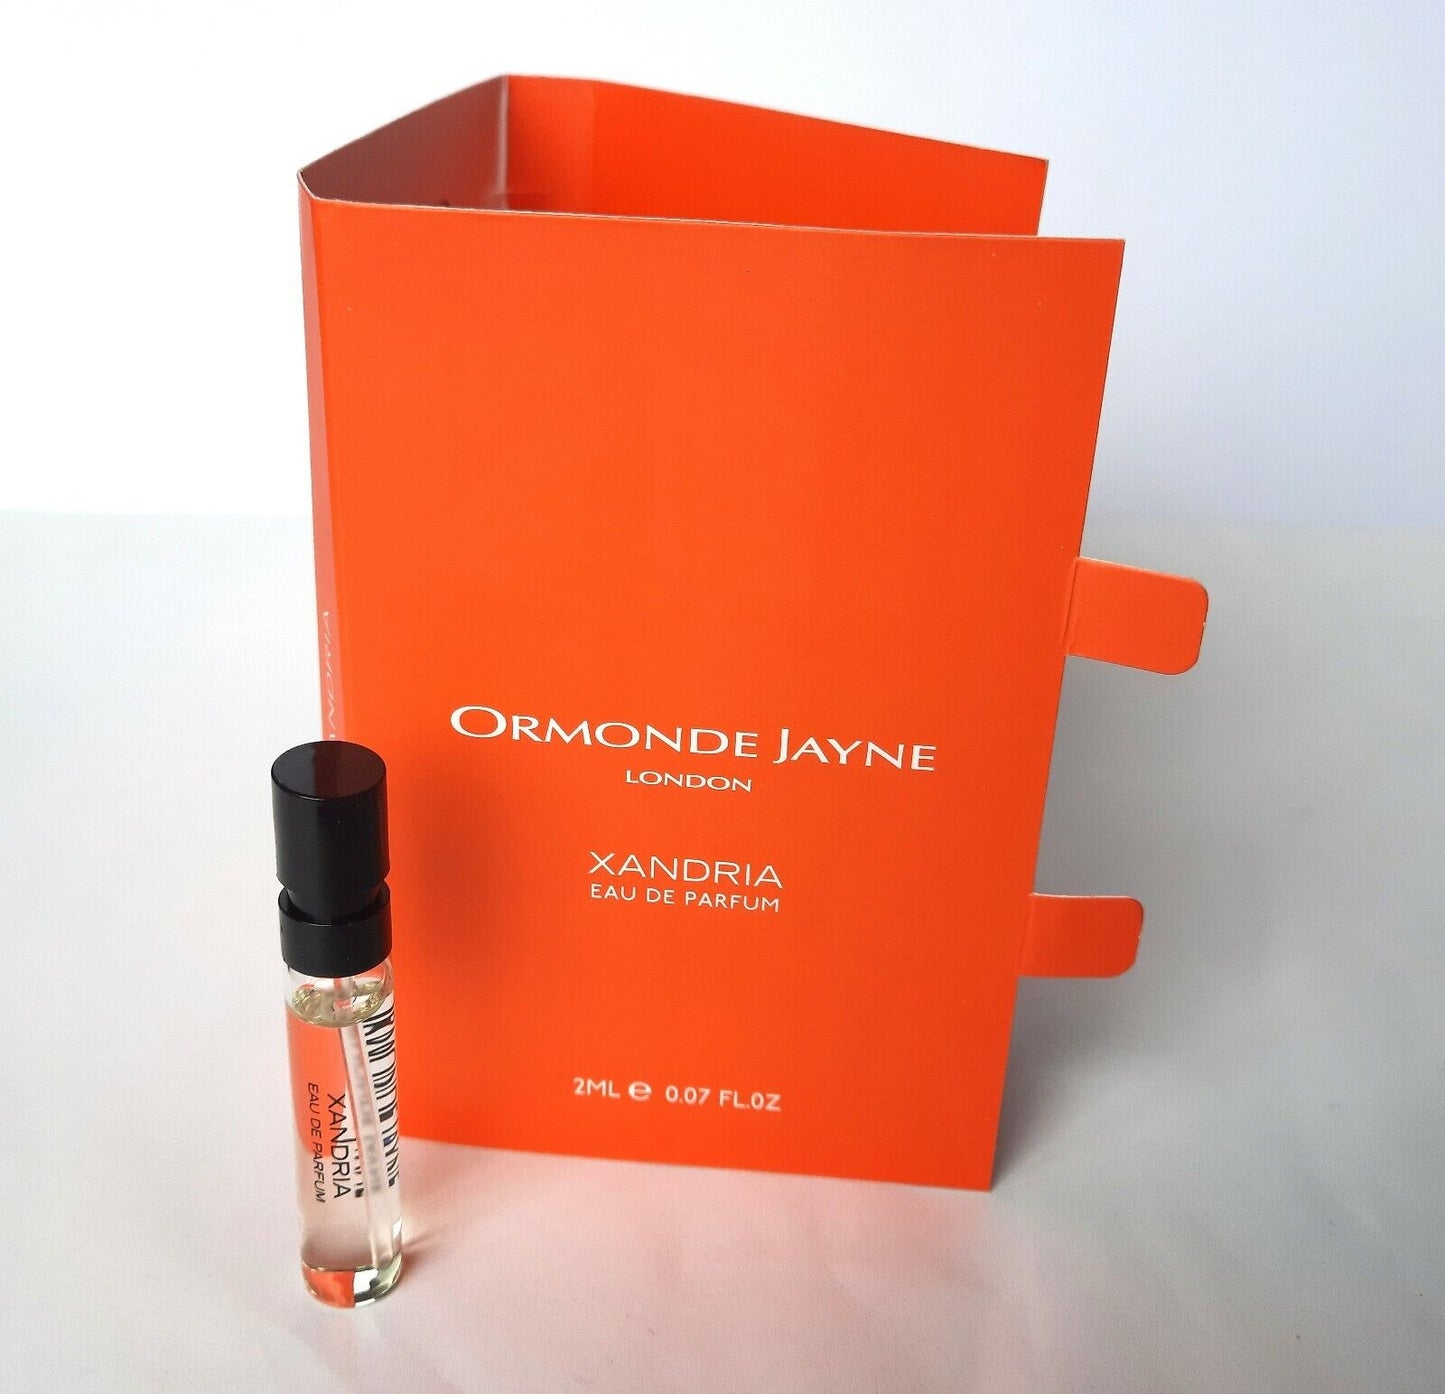 Ormonde Jayne Xandria 2ml 0.07 fl. oz. official fragrance sample